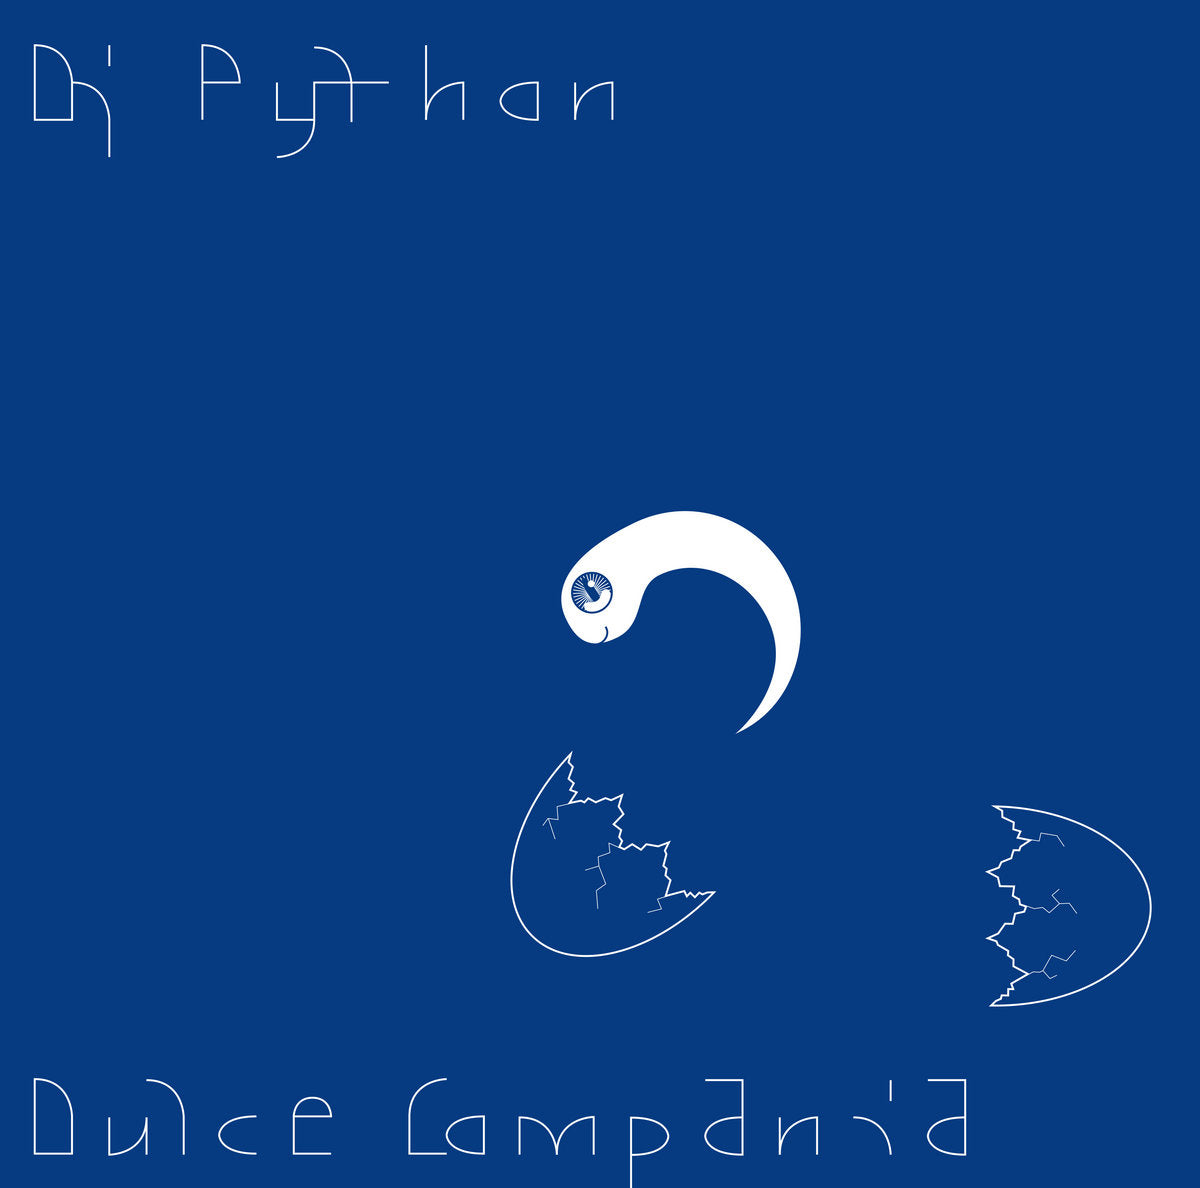 DJ Python - Dulce Compañia